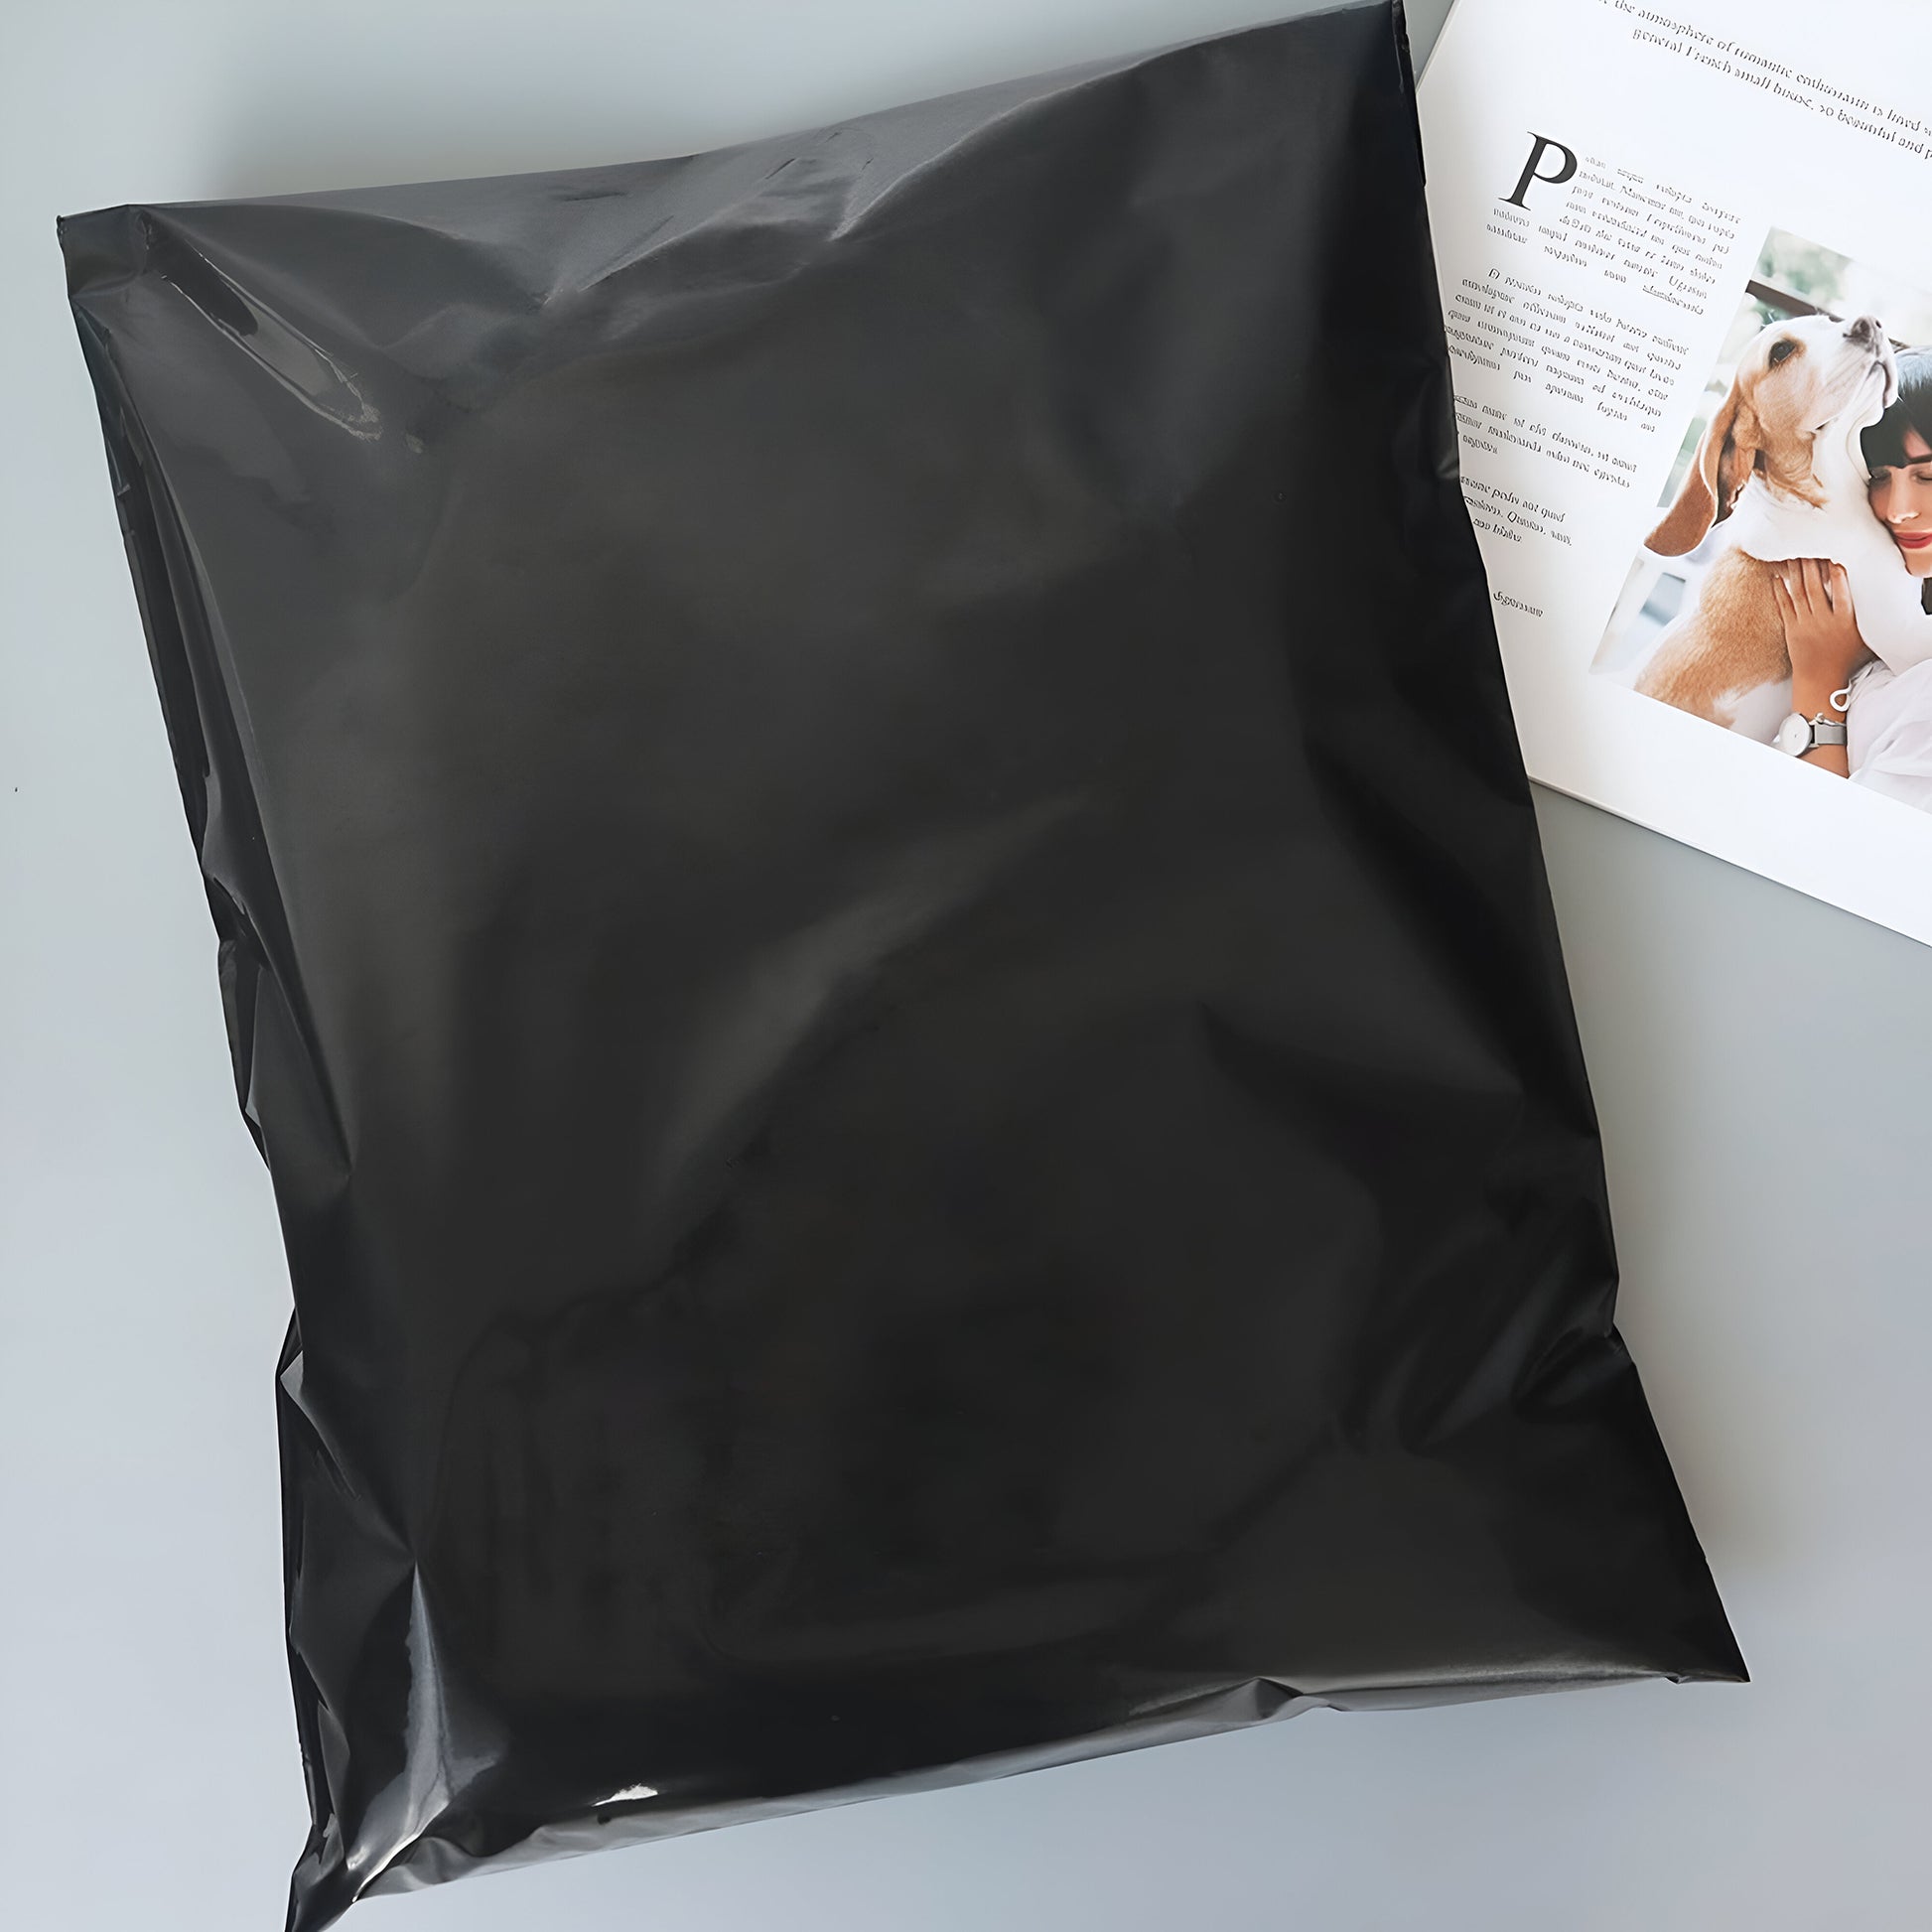 Mailing plastic bag